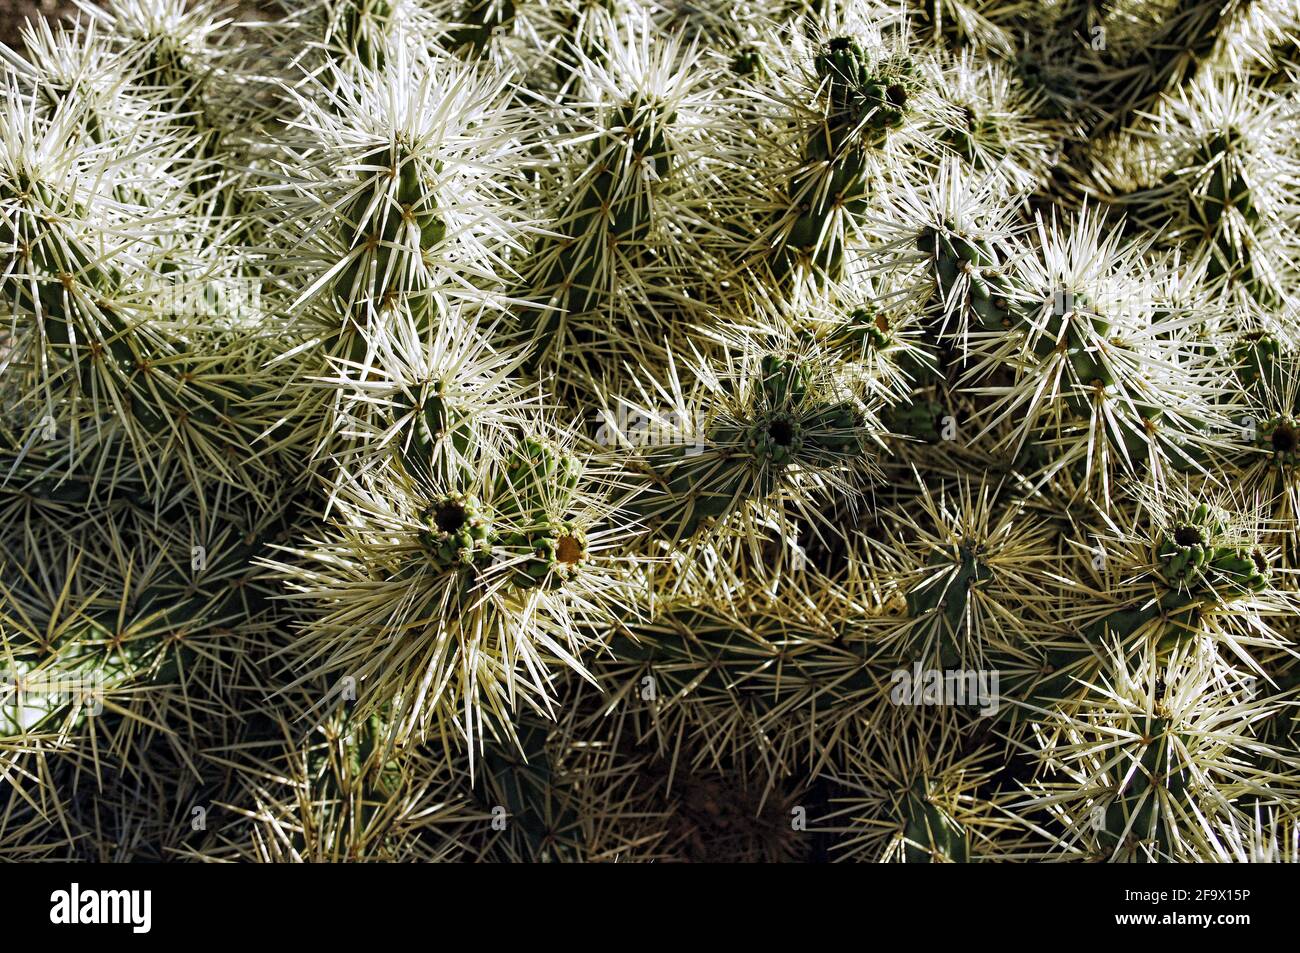 Closeup shot of Cylindropuntia Tunicata cactus with sharp, dense thorns Stock Photo